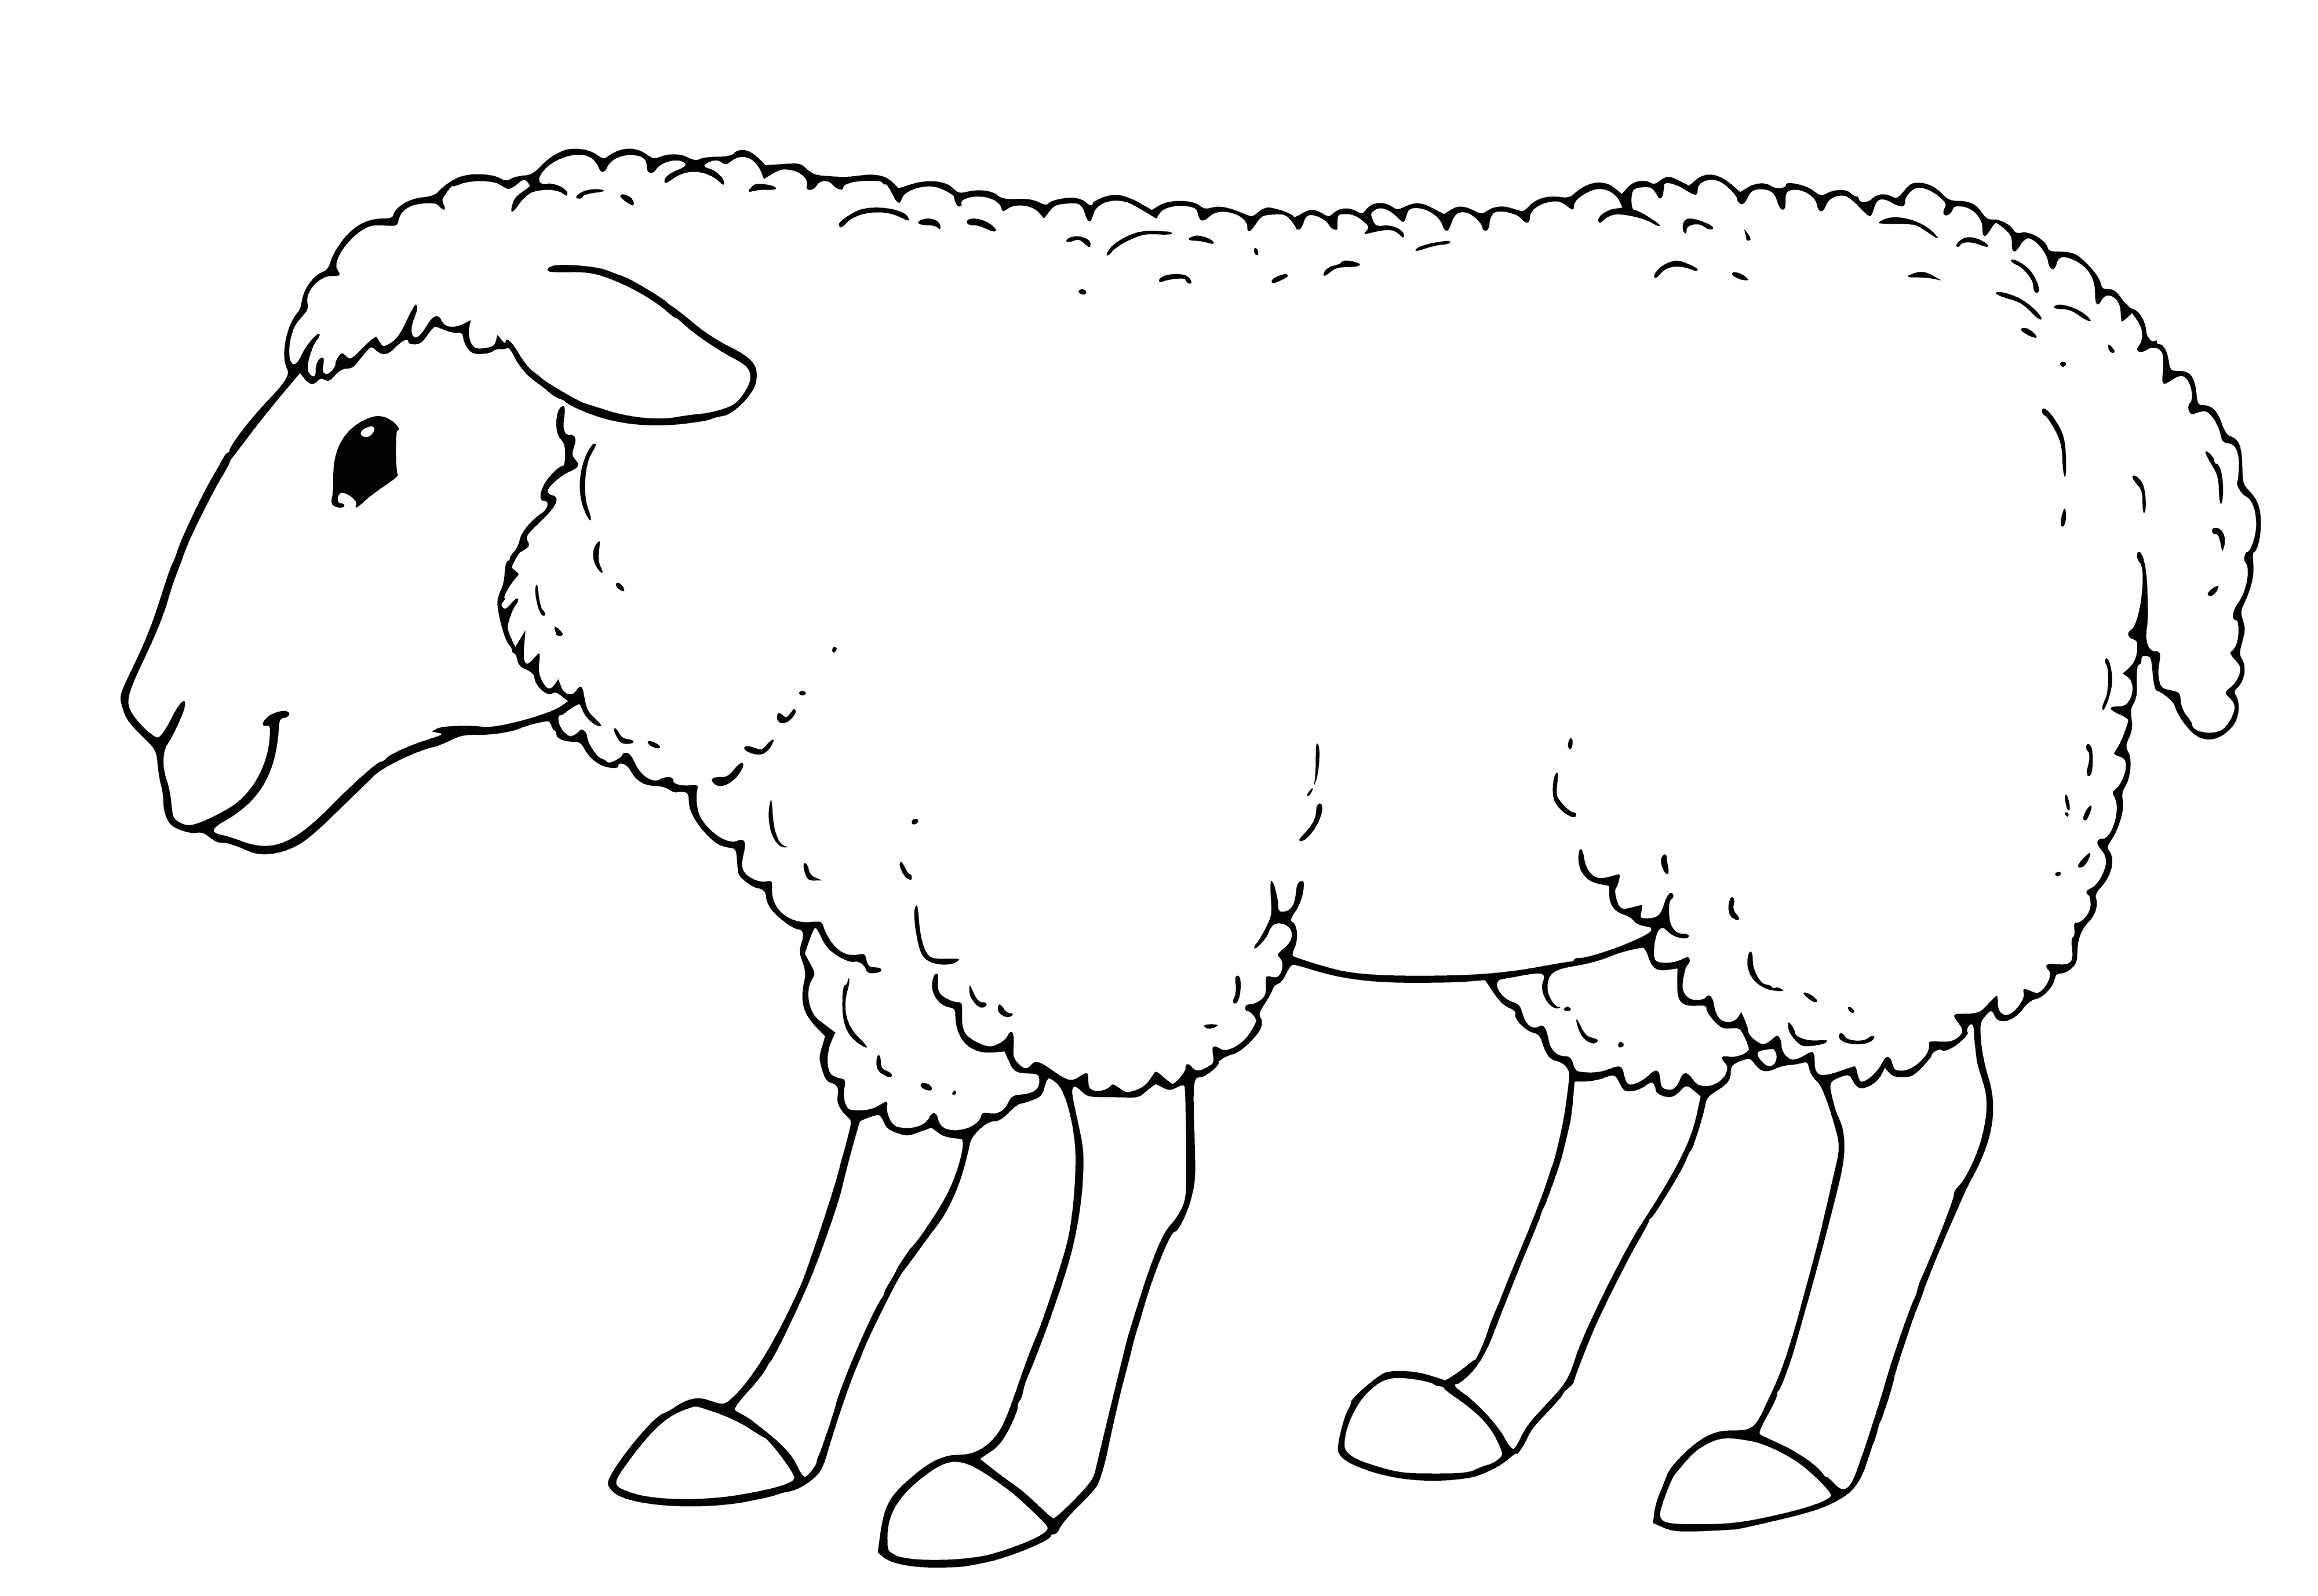 Smiling lamb coloring page